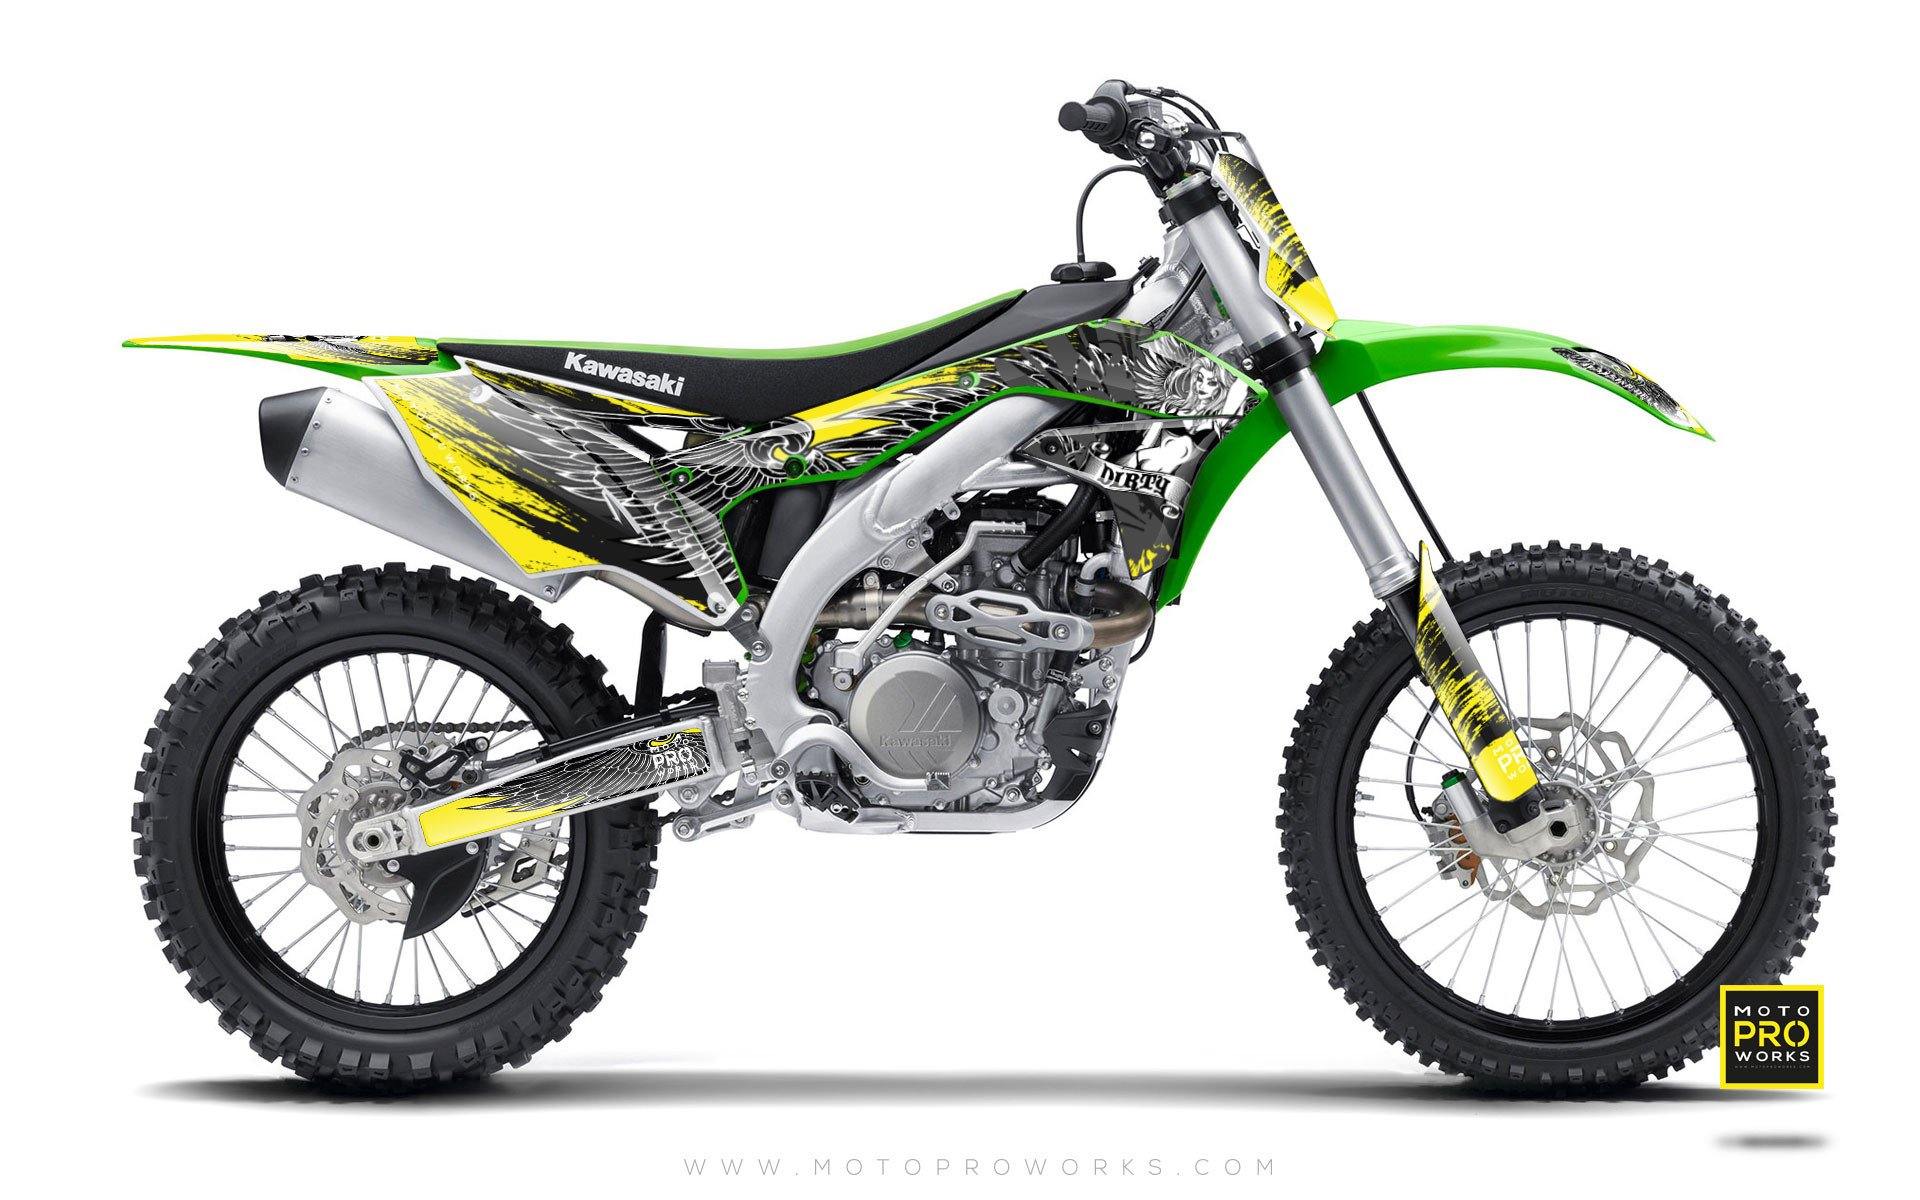 Kawasaki GRAPHIC KIT - "Dirty Angel" (yellow) - MotoProWorks | Decals and Bike Graphic kit